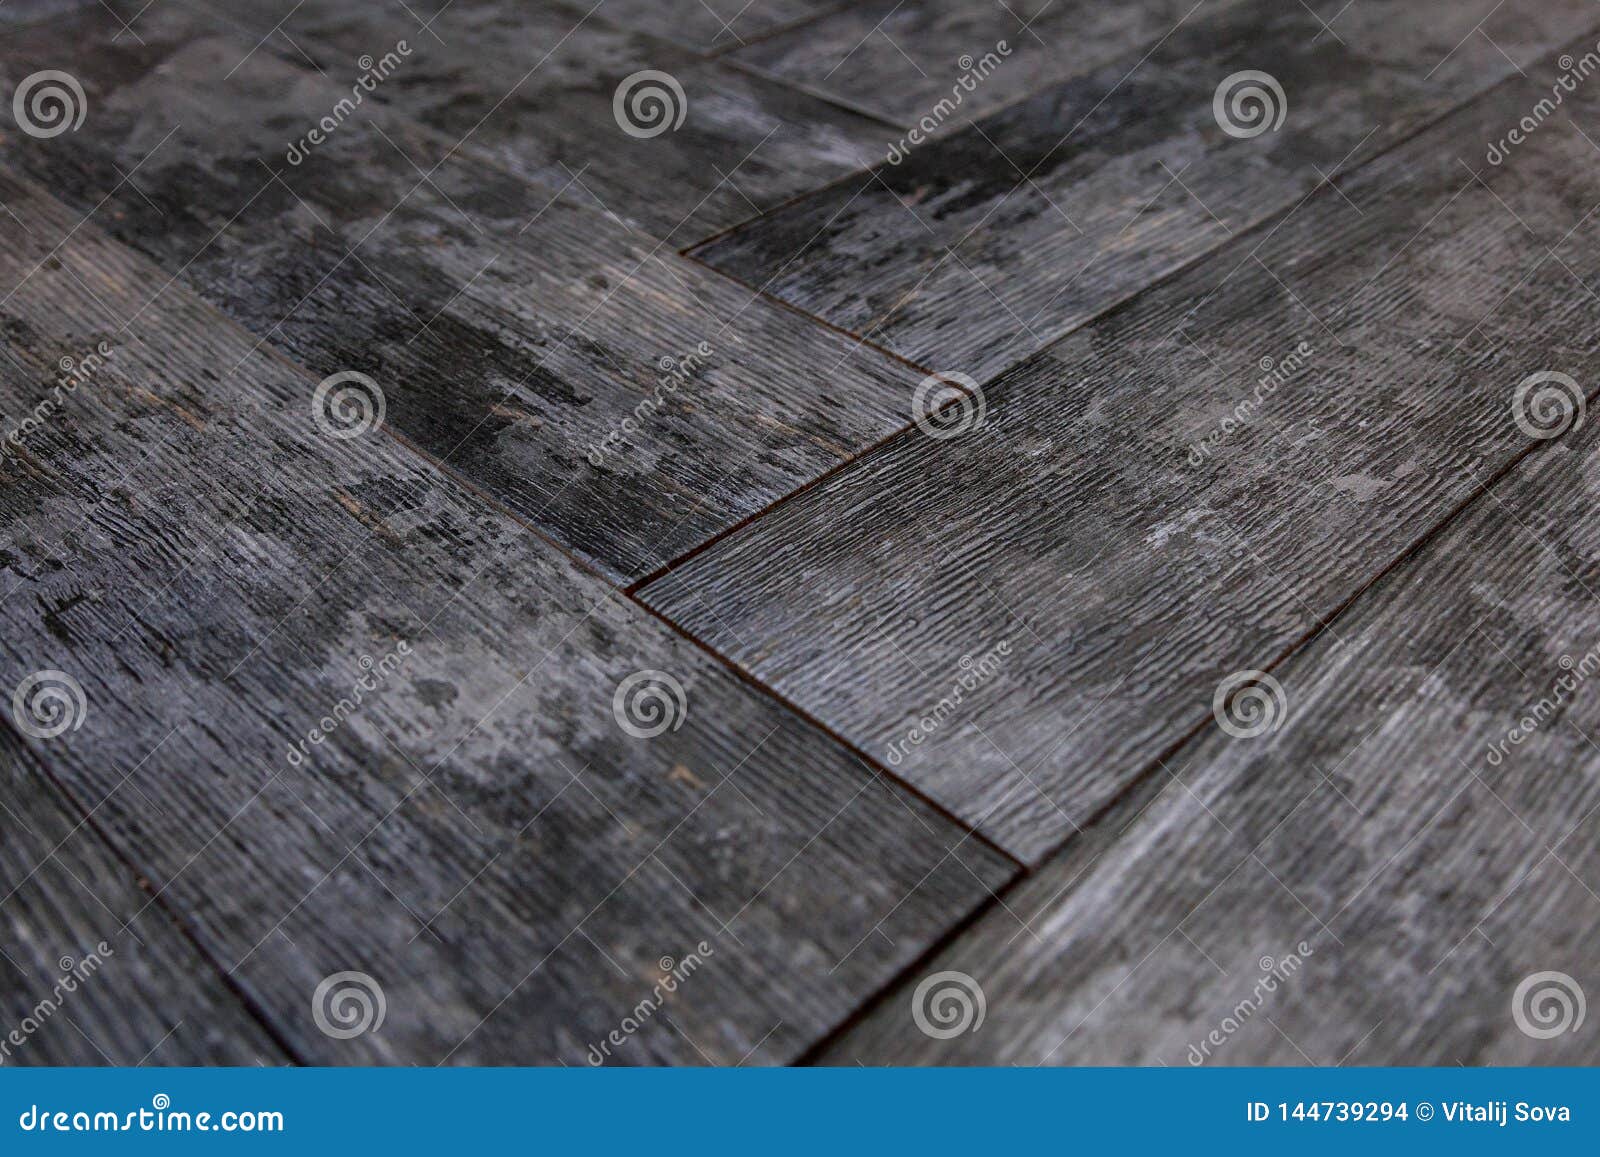 Modern Vinyl Floor With Old Wood Imitation Stock Photo Image Of